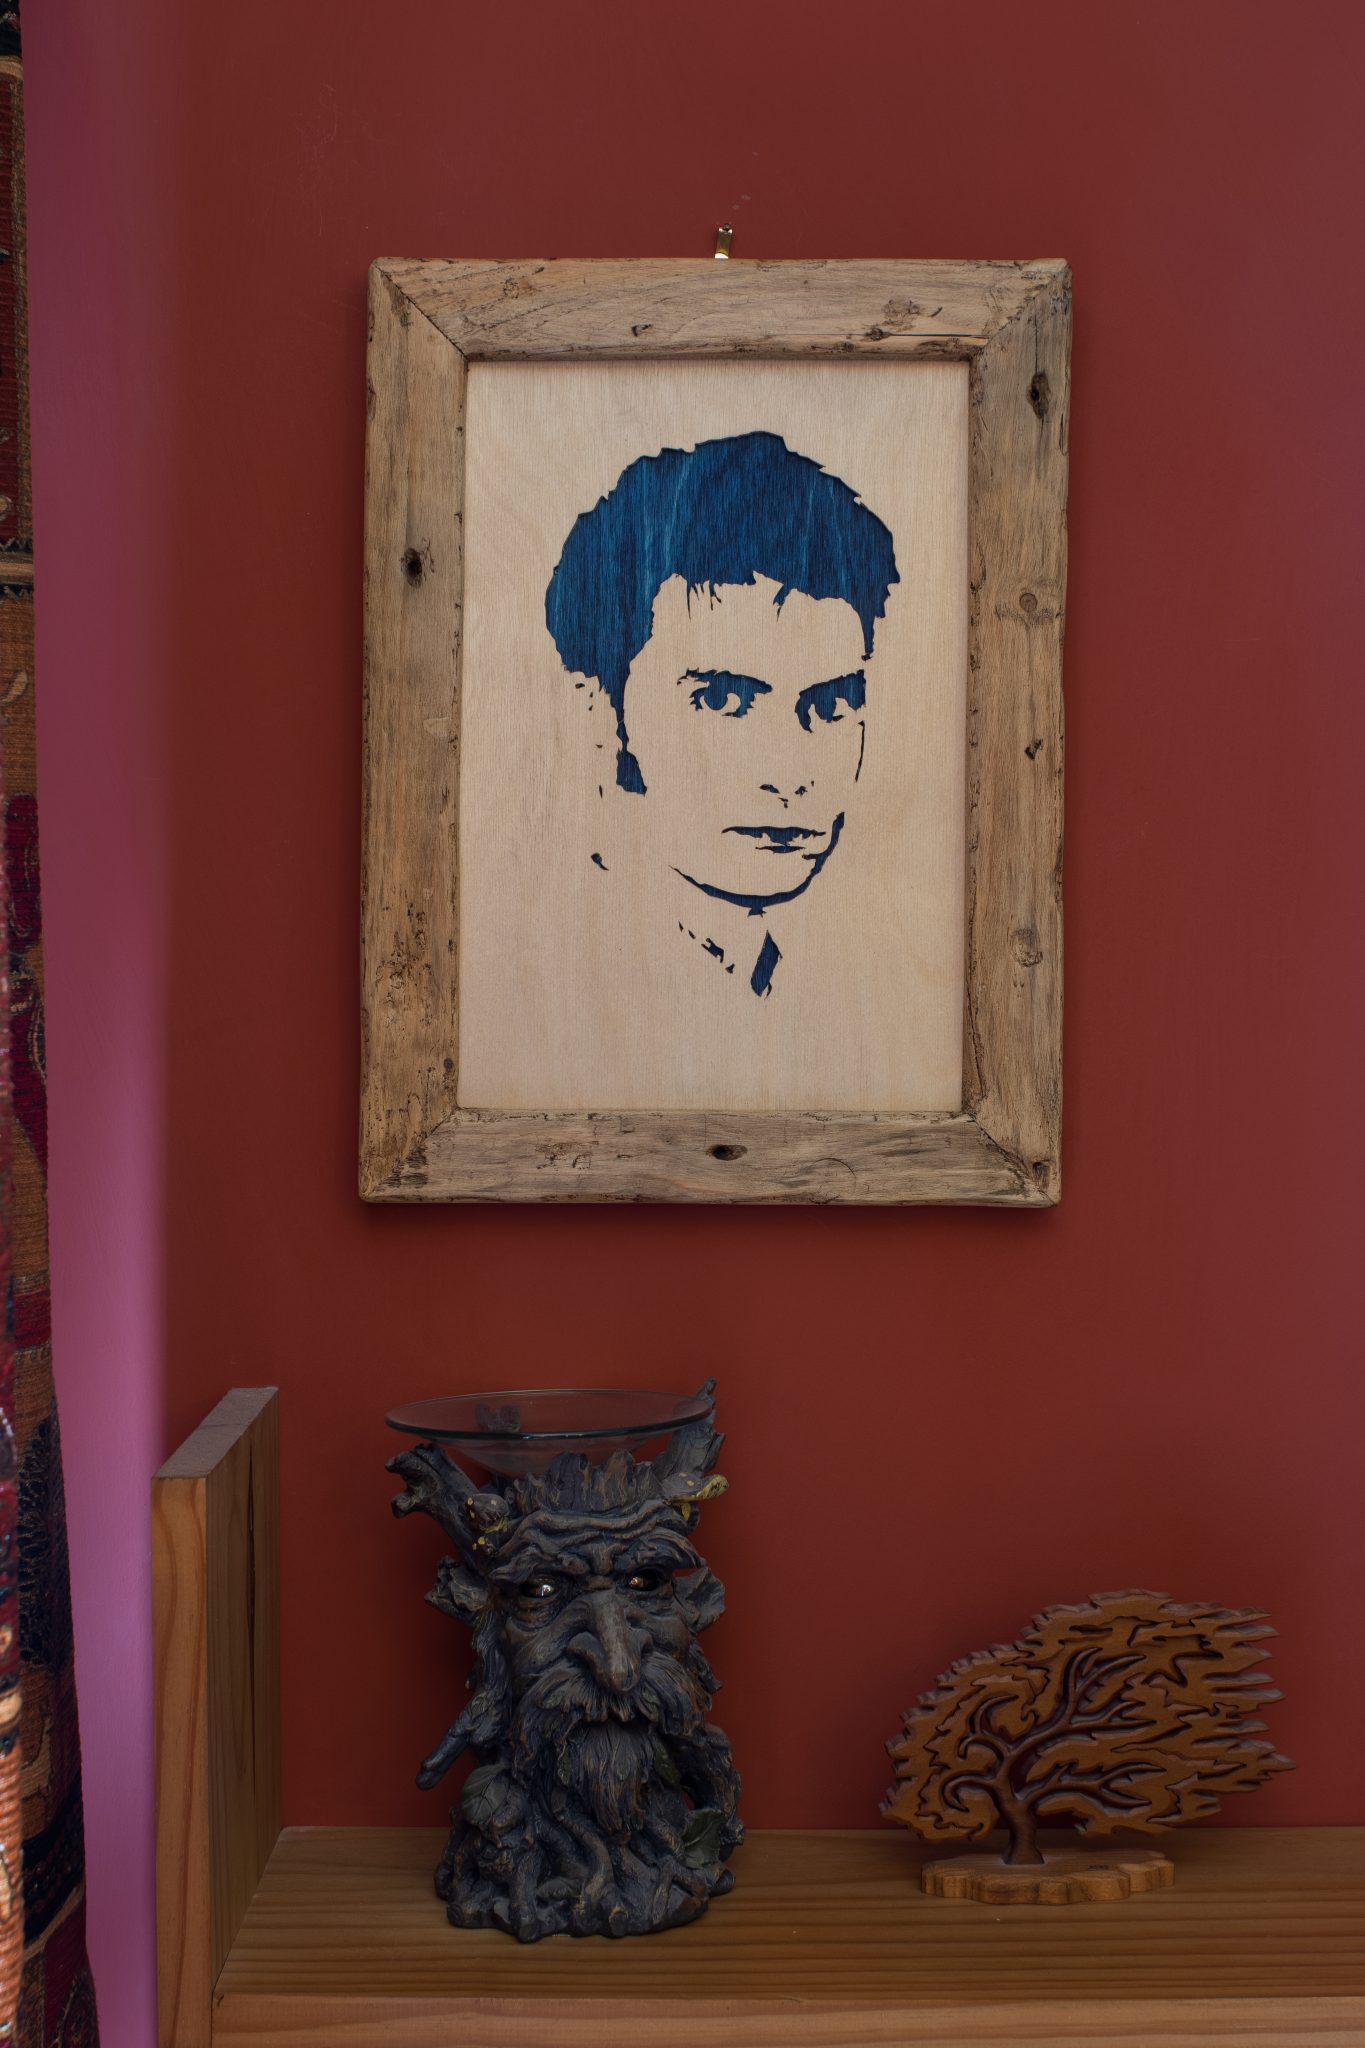 Handmade, framed Wooden Portrait of David Tennant as Doctor Who